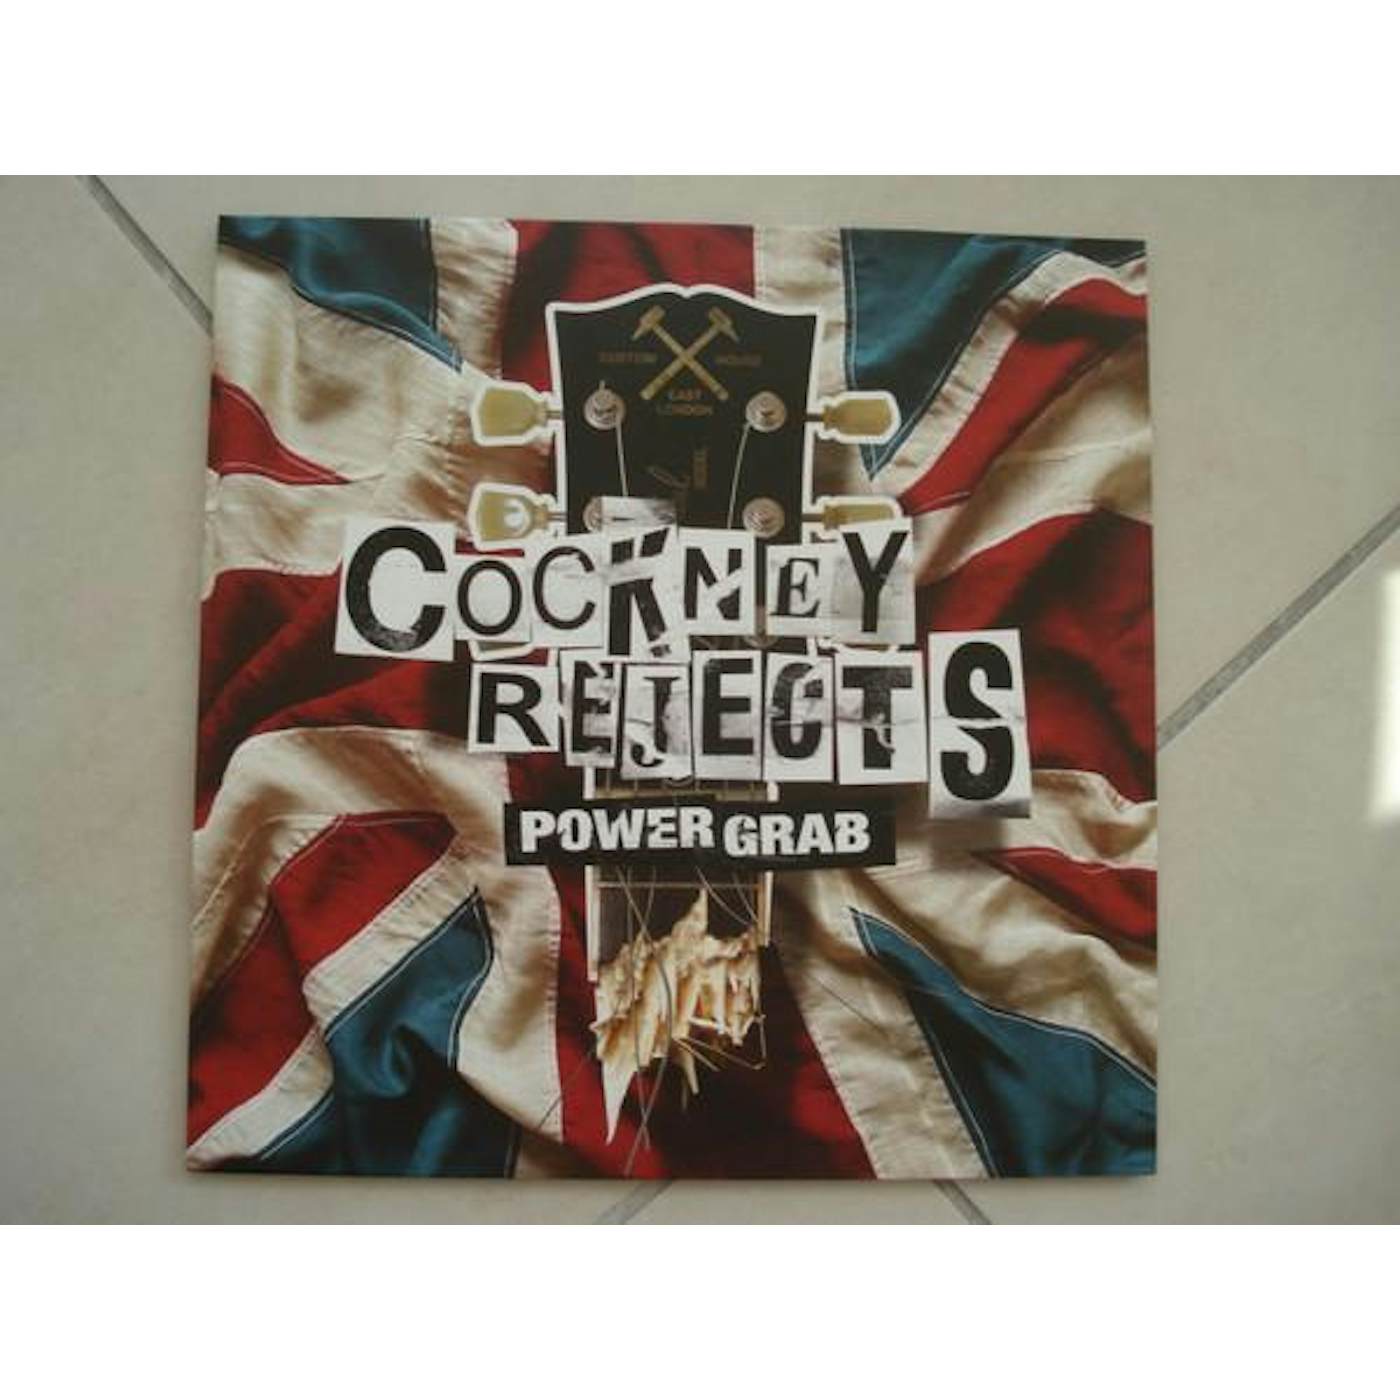 Cockney Rejects LP - Power Grab (Vinyl)